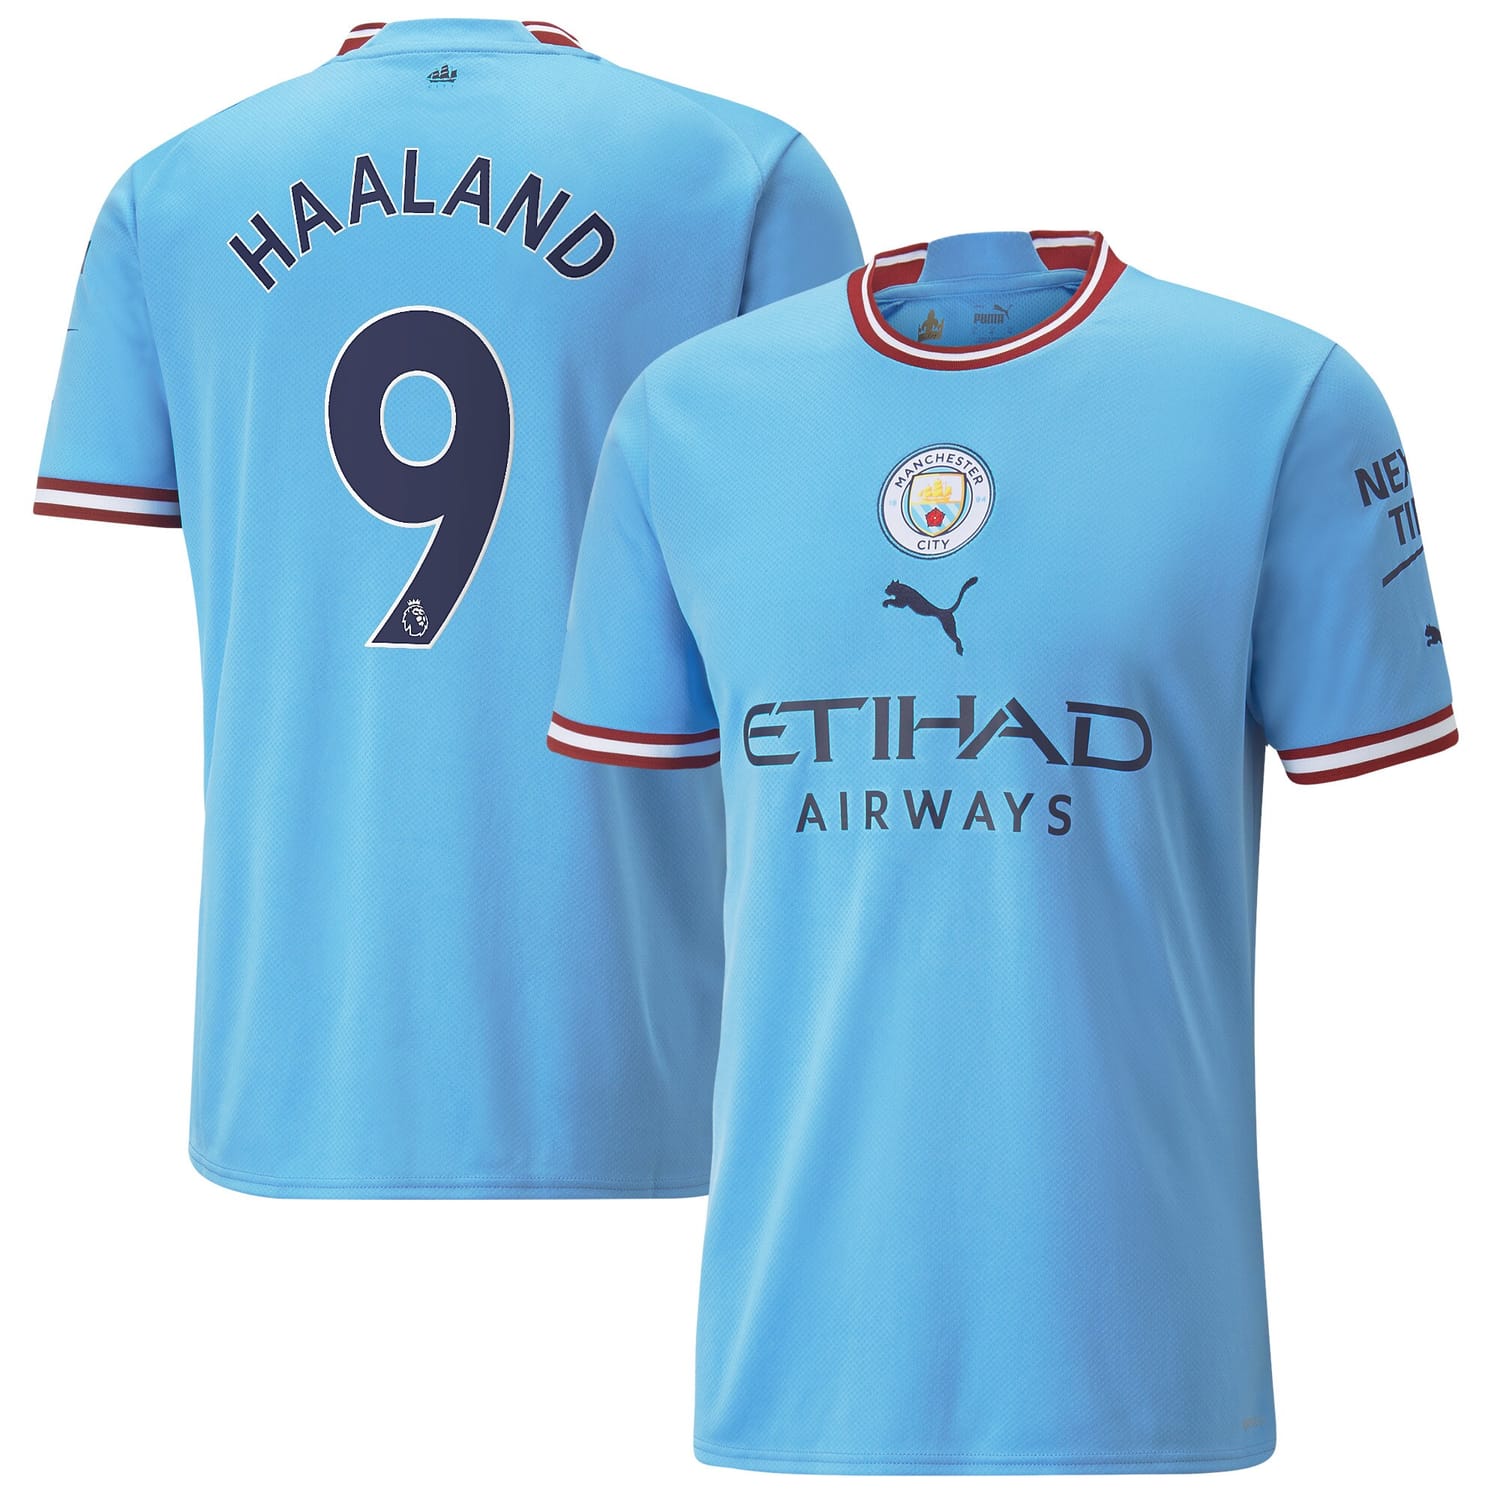 Premier League Manchester City Home Jersey Shirt Light Blue 2022-23 player Erling Haaland printing for Men